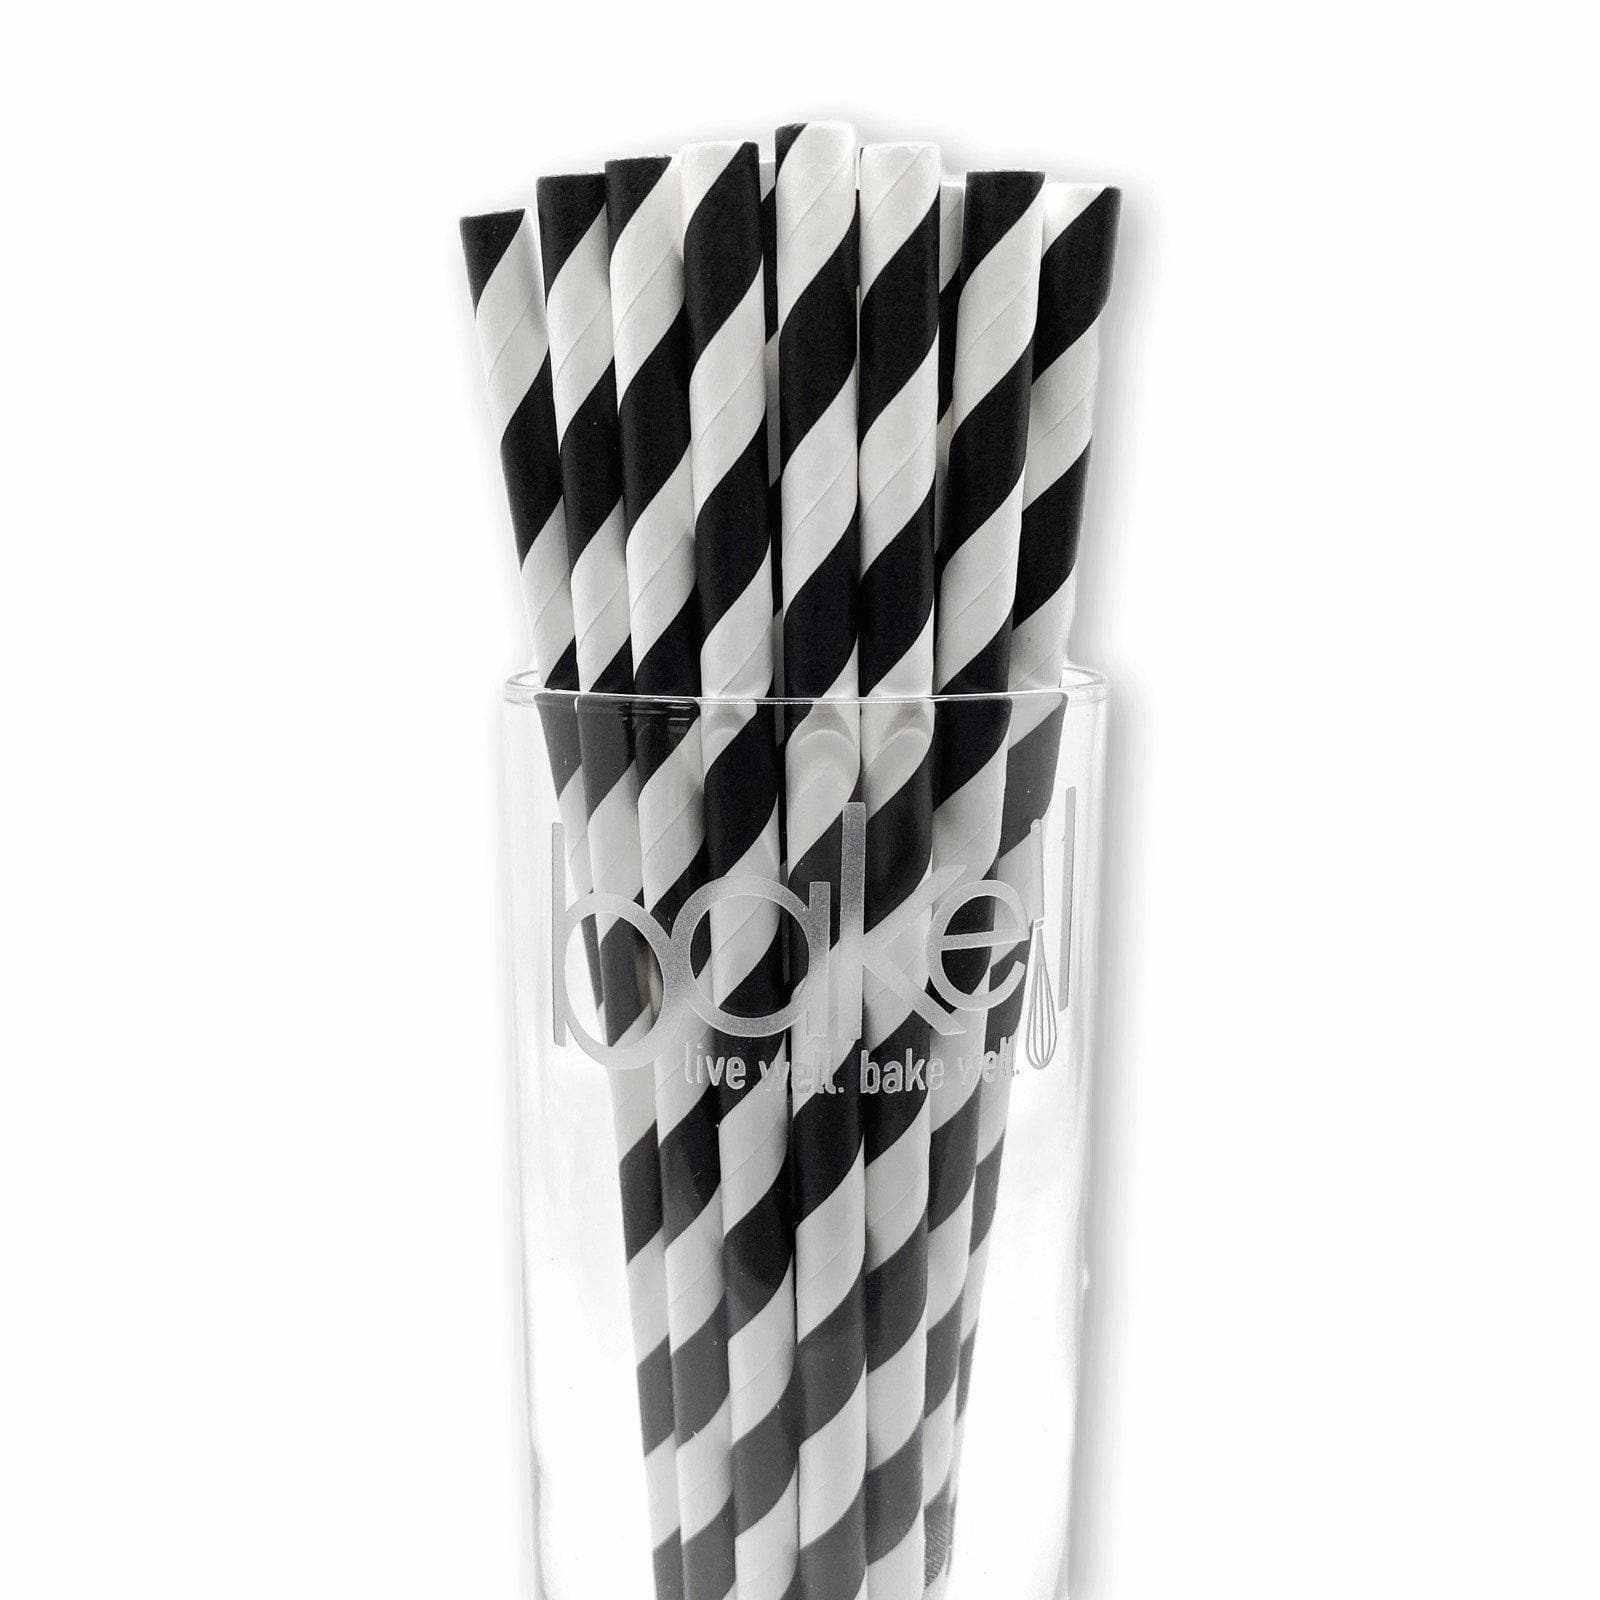 Black & White Candy Cane Striped Cake Pop Party Straws-Cake Pop Straws-bakell